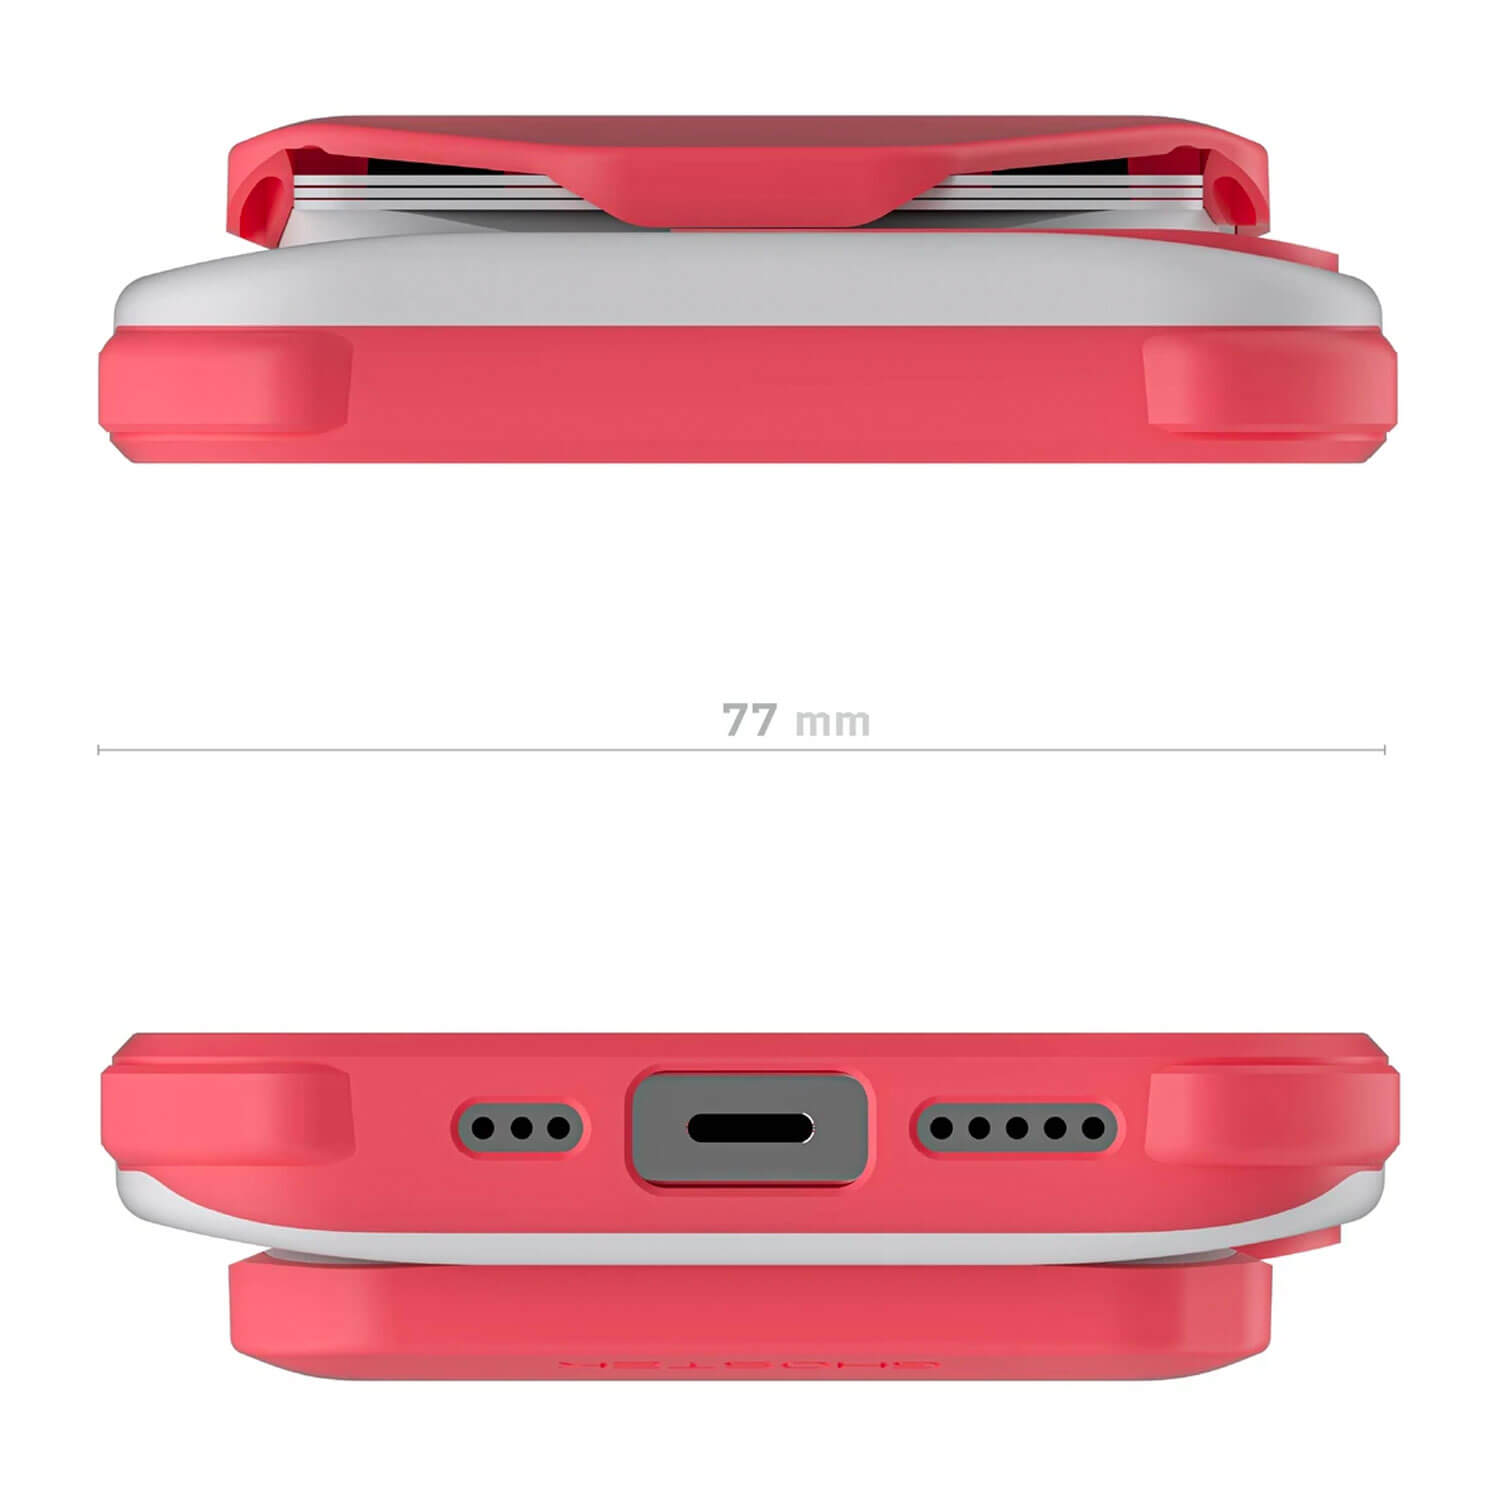 Ghostek iPhone 13 Case Exec 5 Genuine Leather Wallet Pink